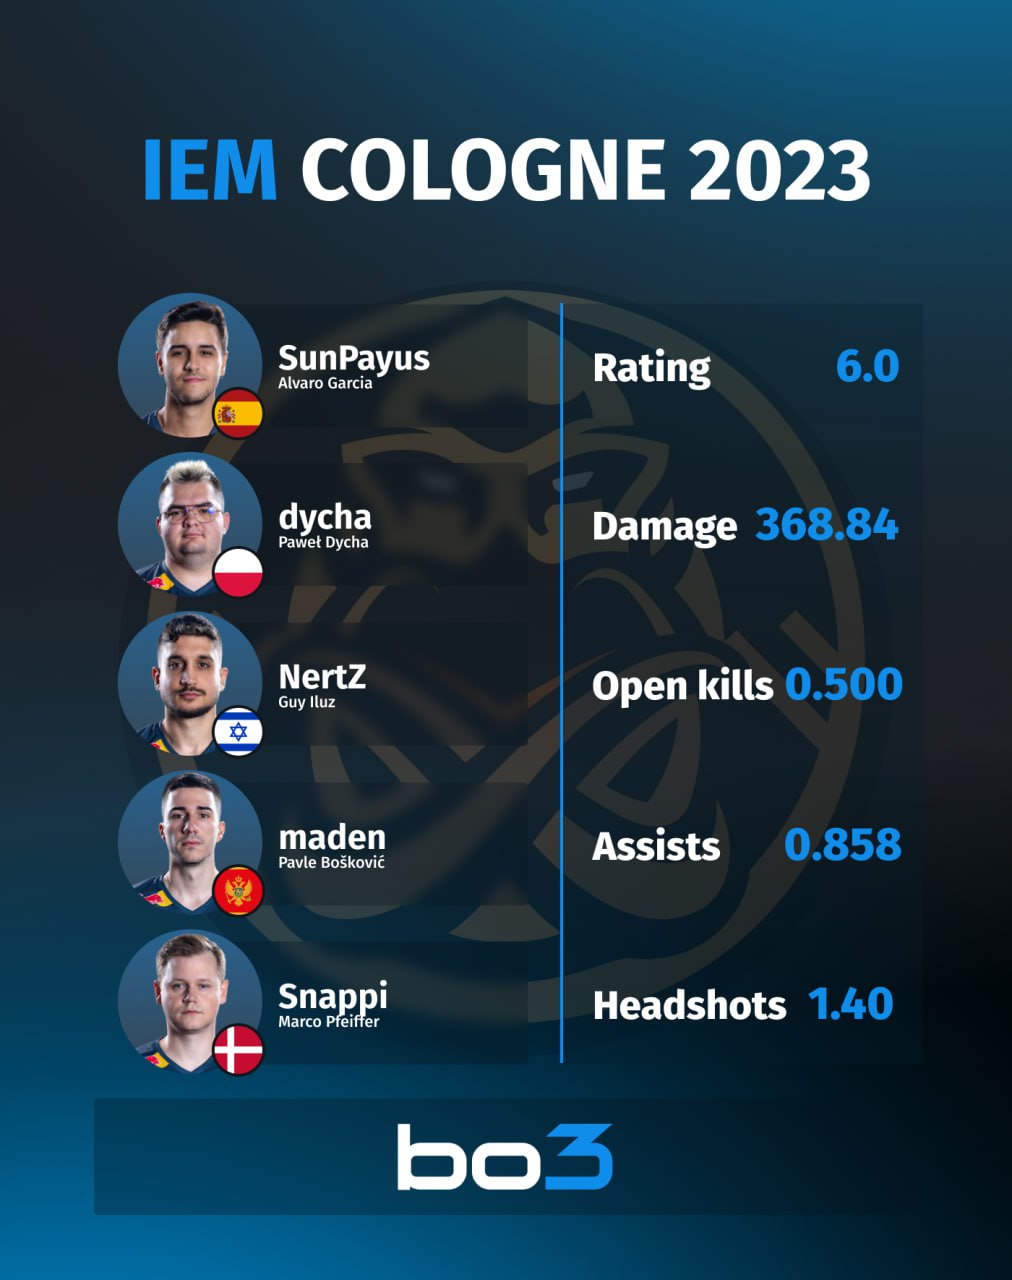 ENCE statistics at IEM Cologne 2023